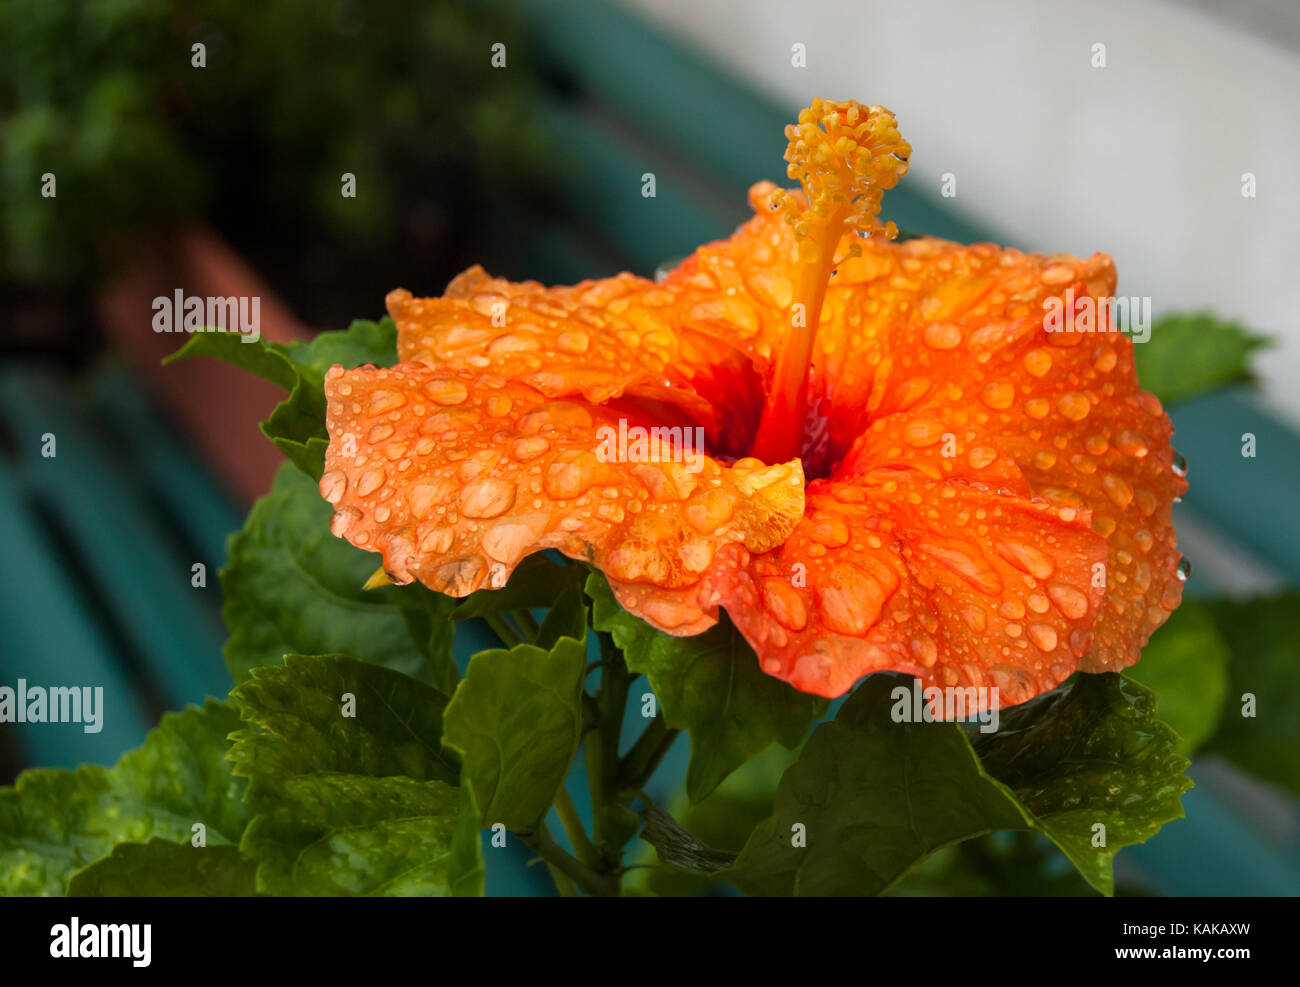 A single hibiscus brilliant orange in color and covered in pearls rain drops. Stock Photo